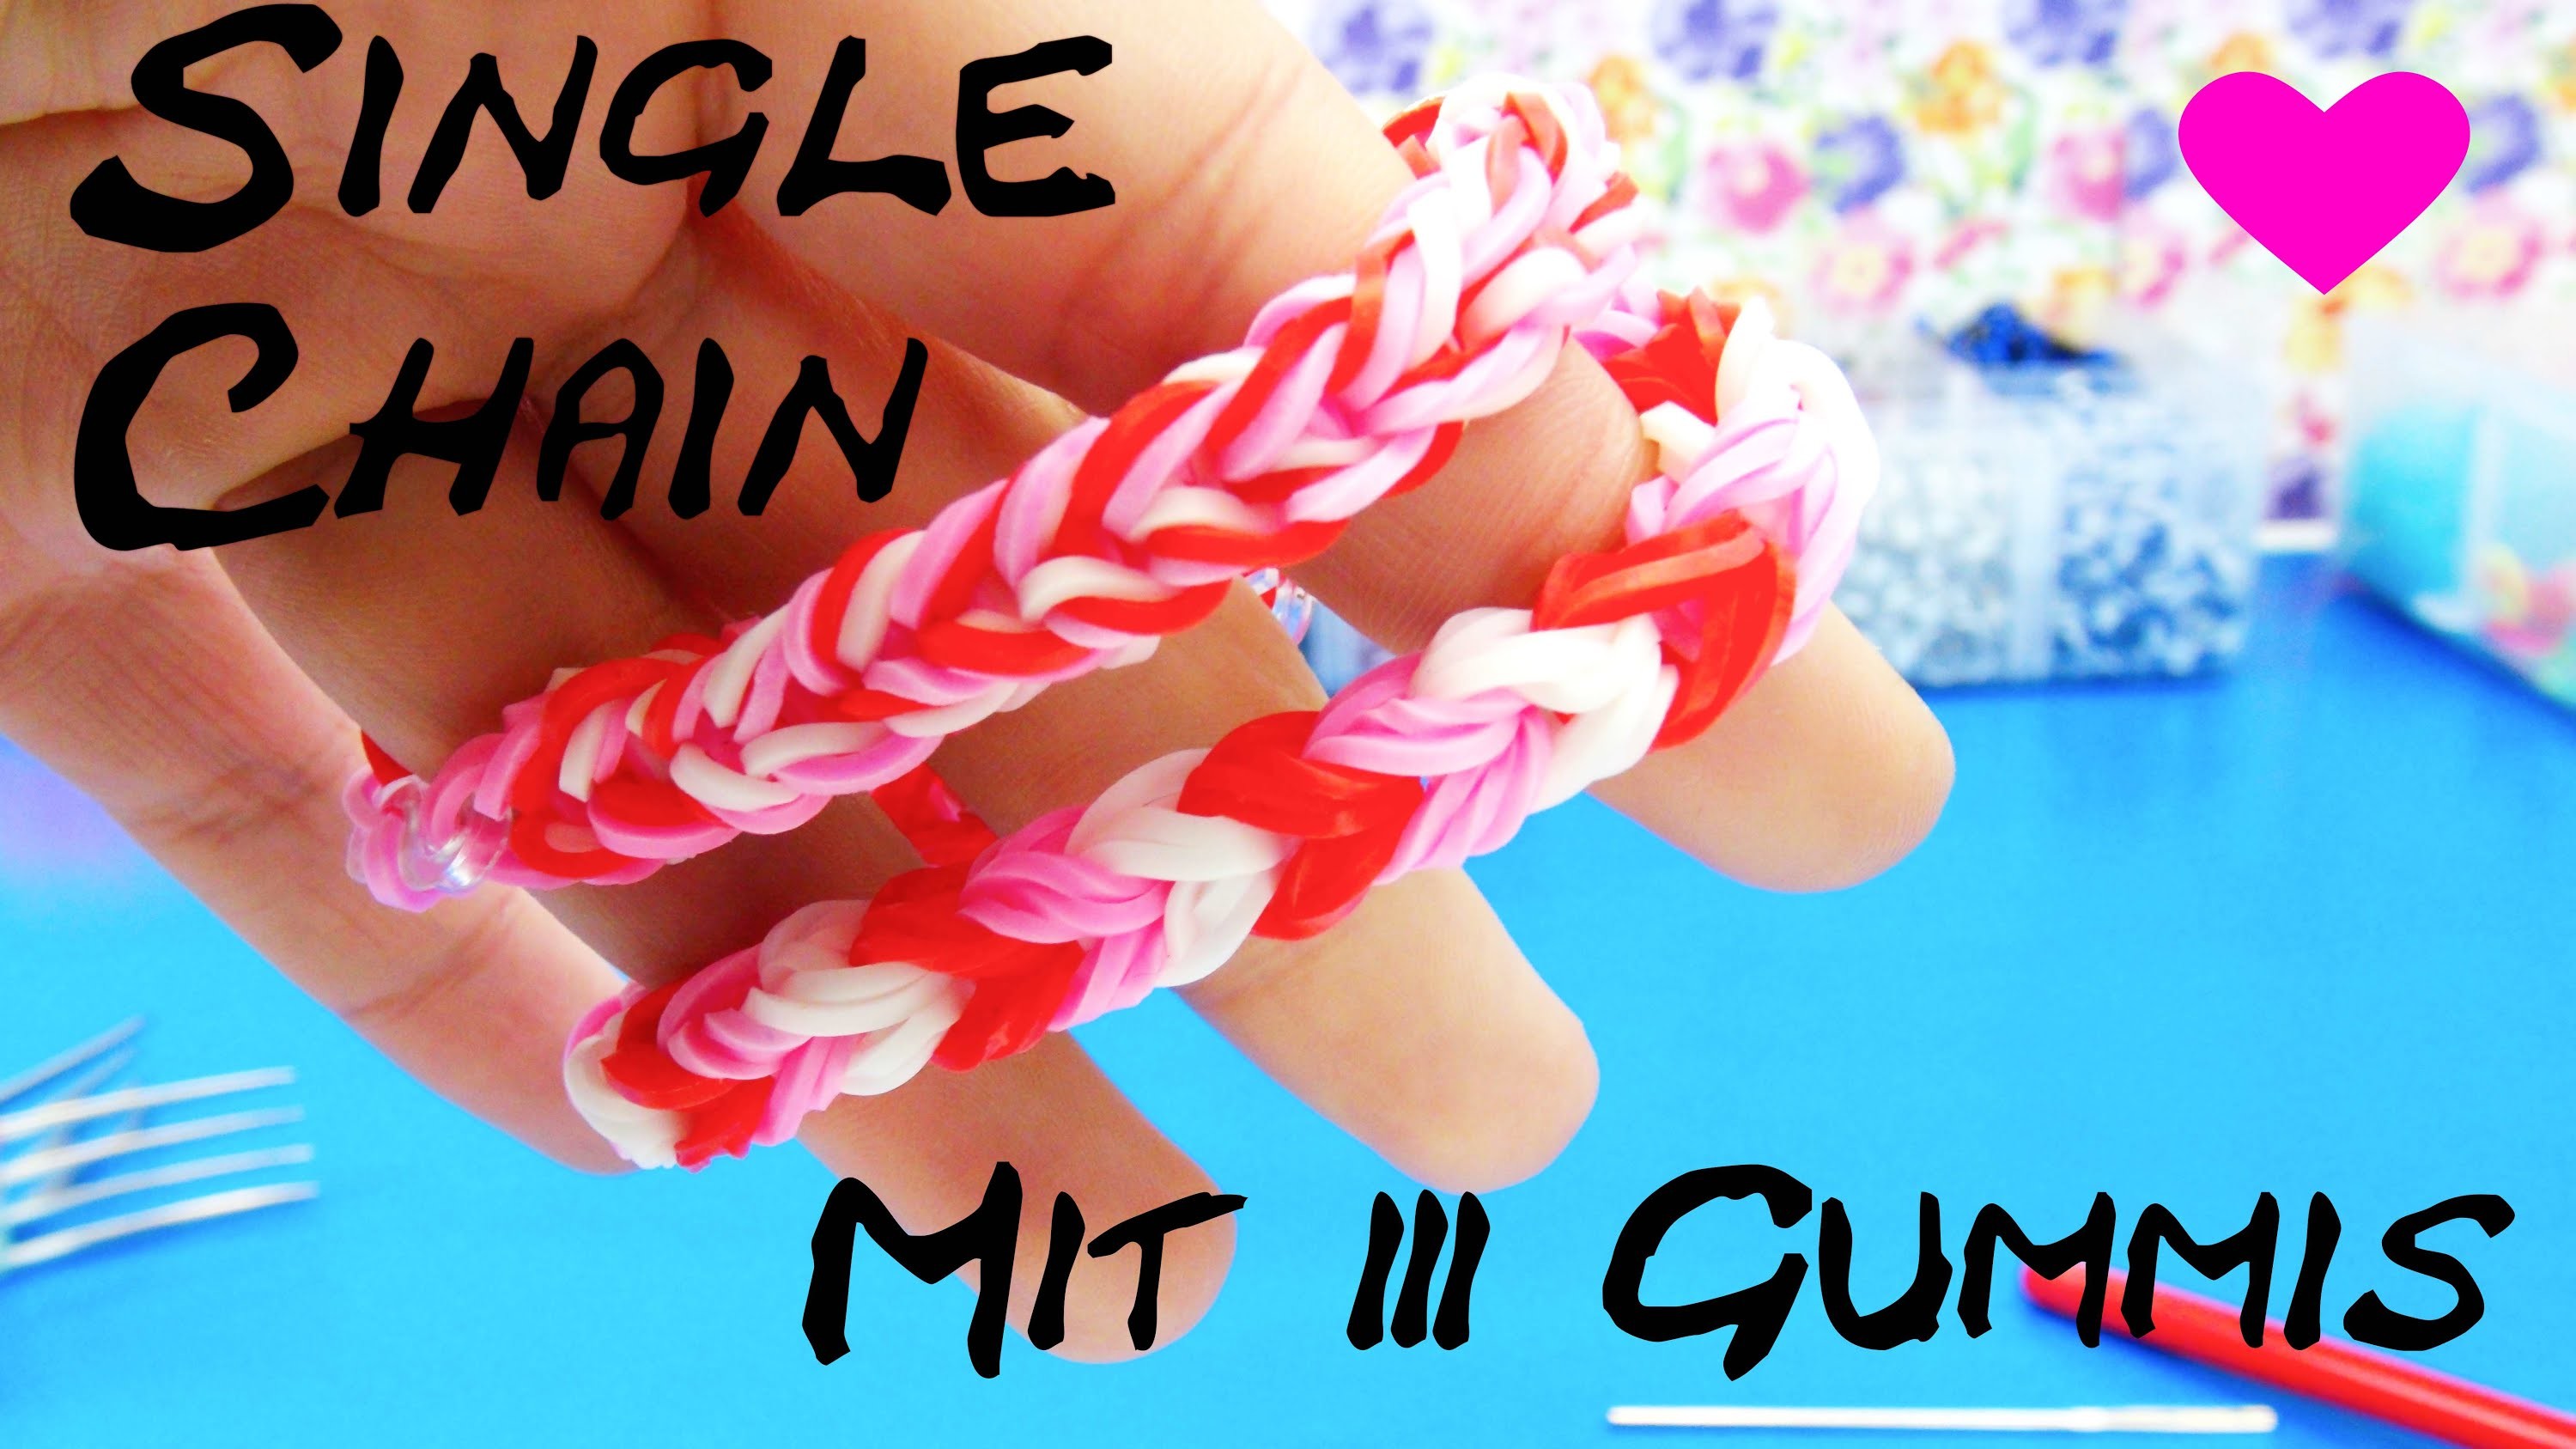 Loom Bands Single Chain mit 3 Gummis. Single Chain Rainbow Loom Tutorial Anleitung | deutsch